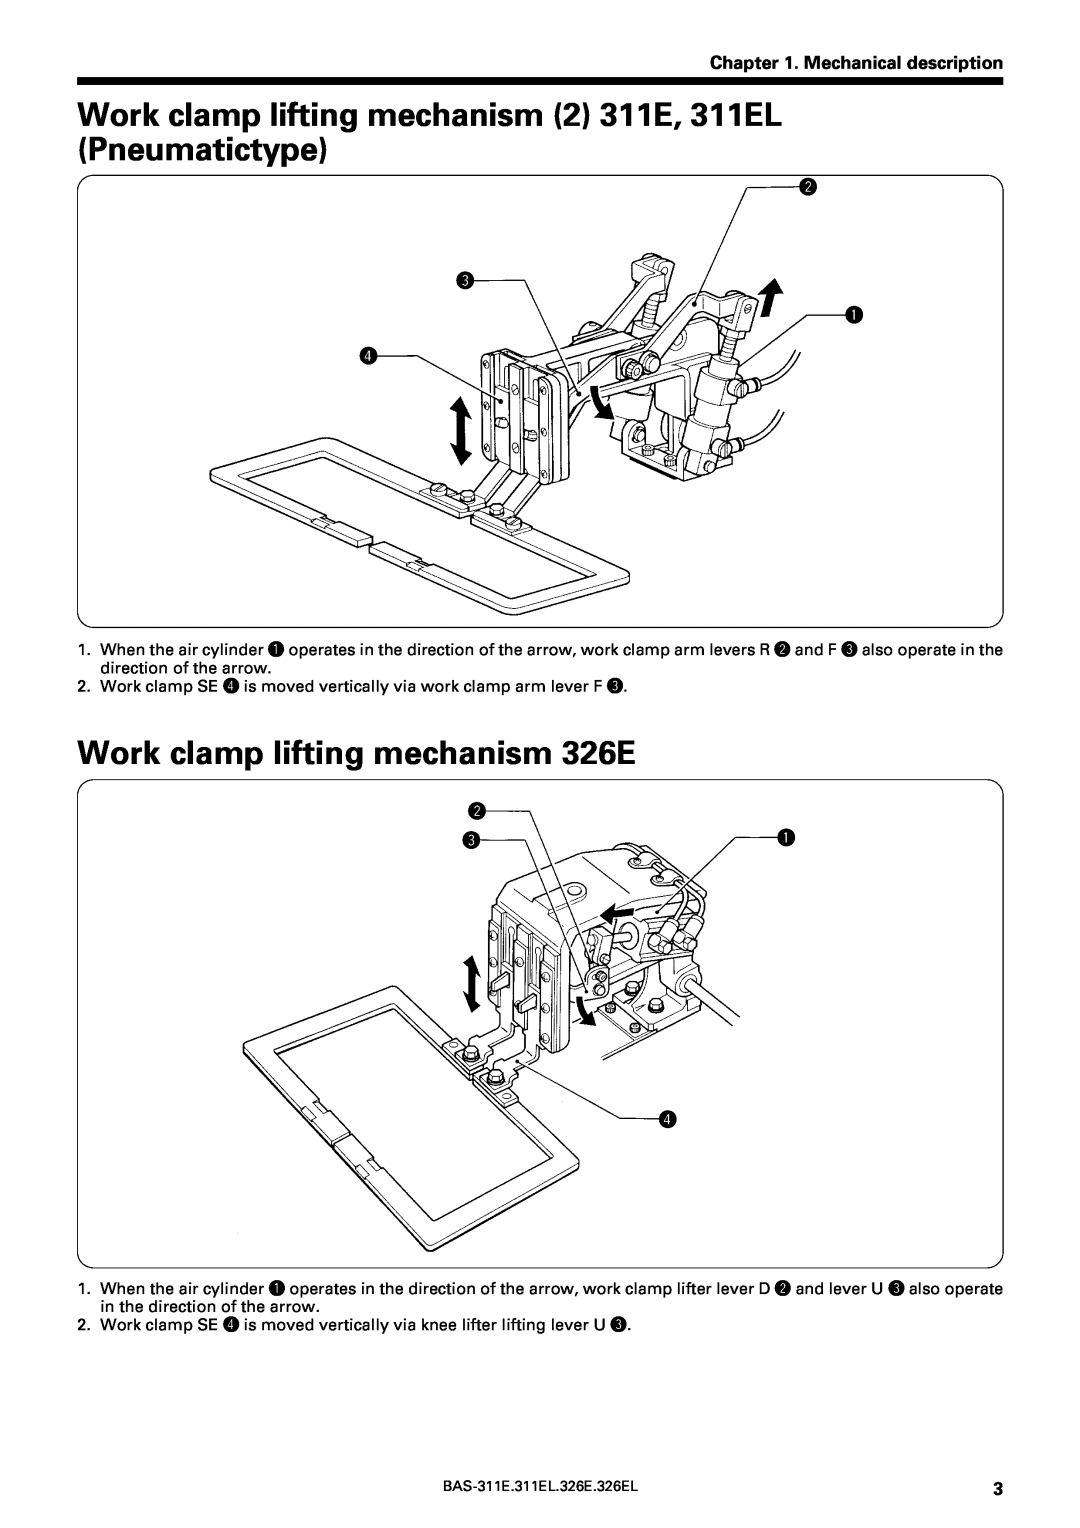 Brother BAS-311E Work clamp lifting mechanism 2 311E, 311EL Pneumatictype, Work clamp lifting mechanism 326E, w e q r 